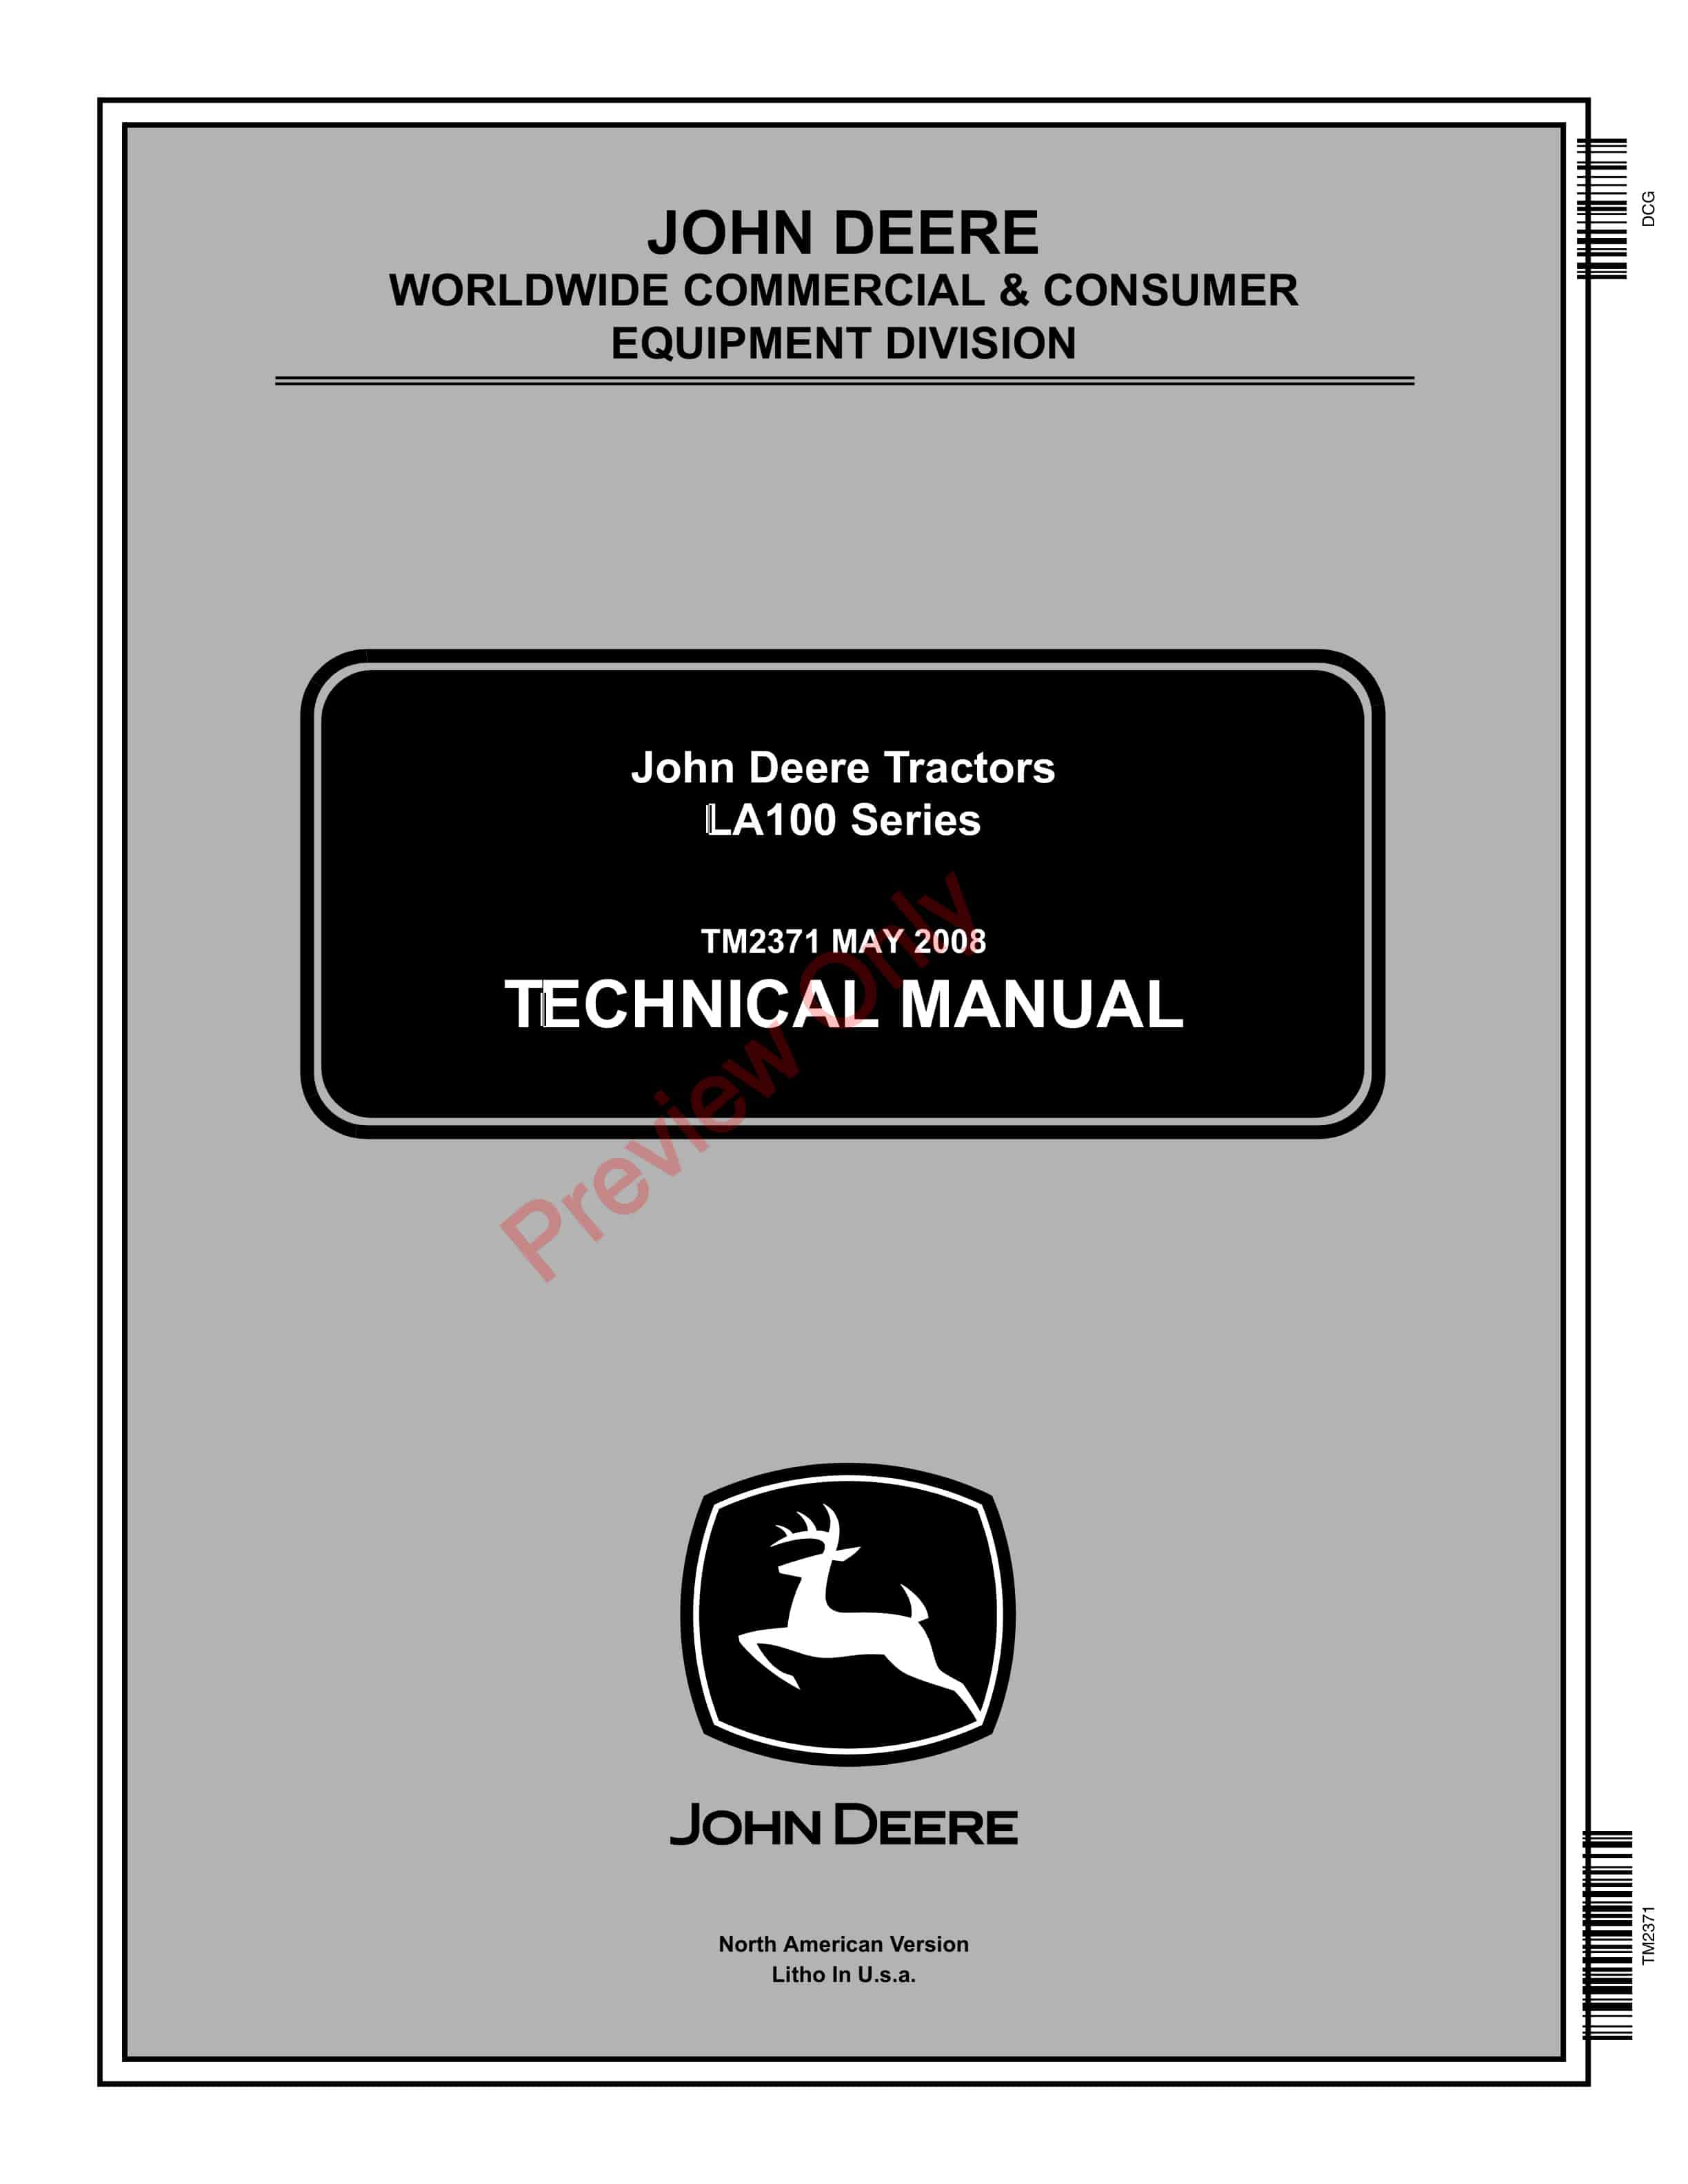 John Deere LA100 Series Tractor Technical Manual TM2371 01MAY08 1